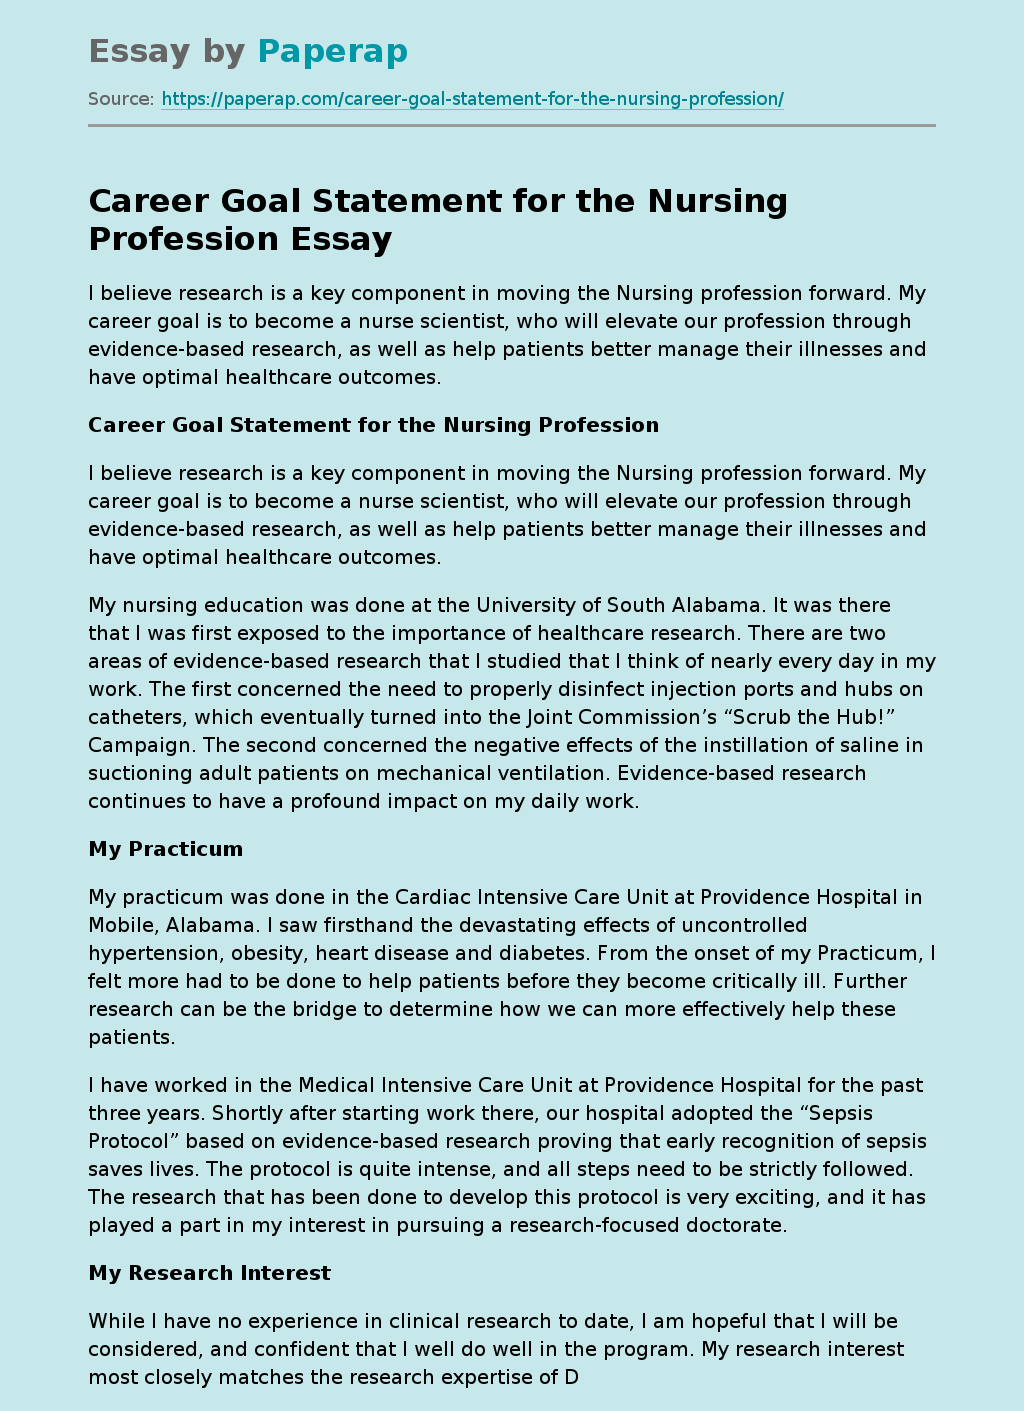 Career Goal Statement for the Nursing Profession